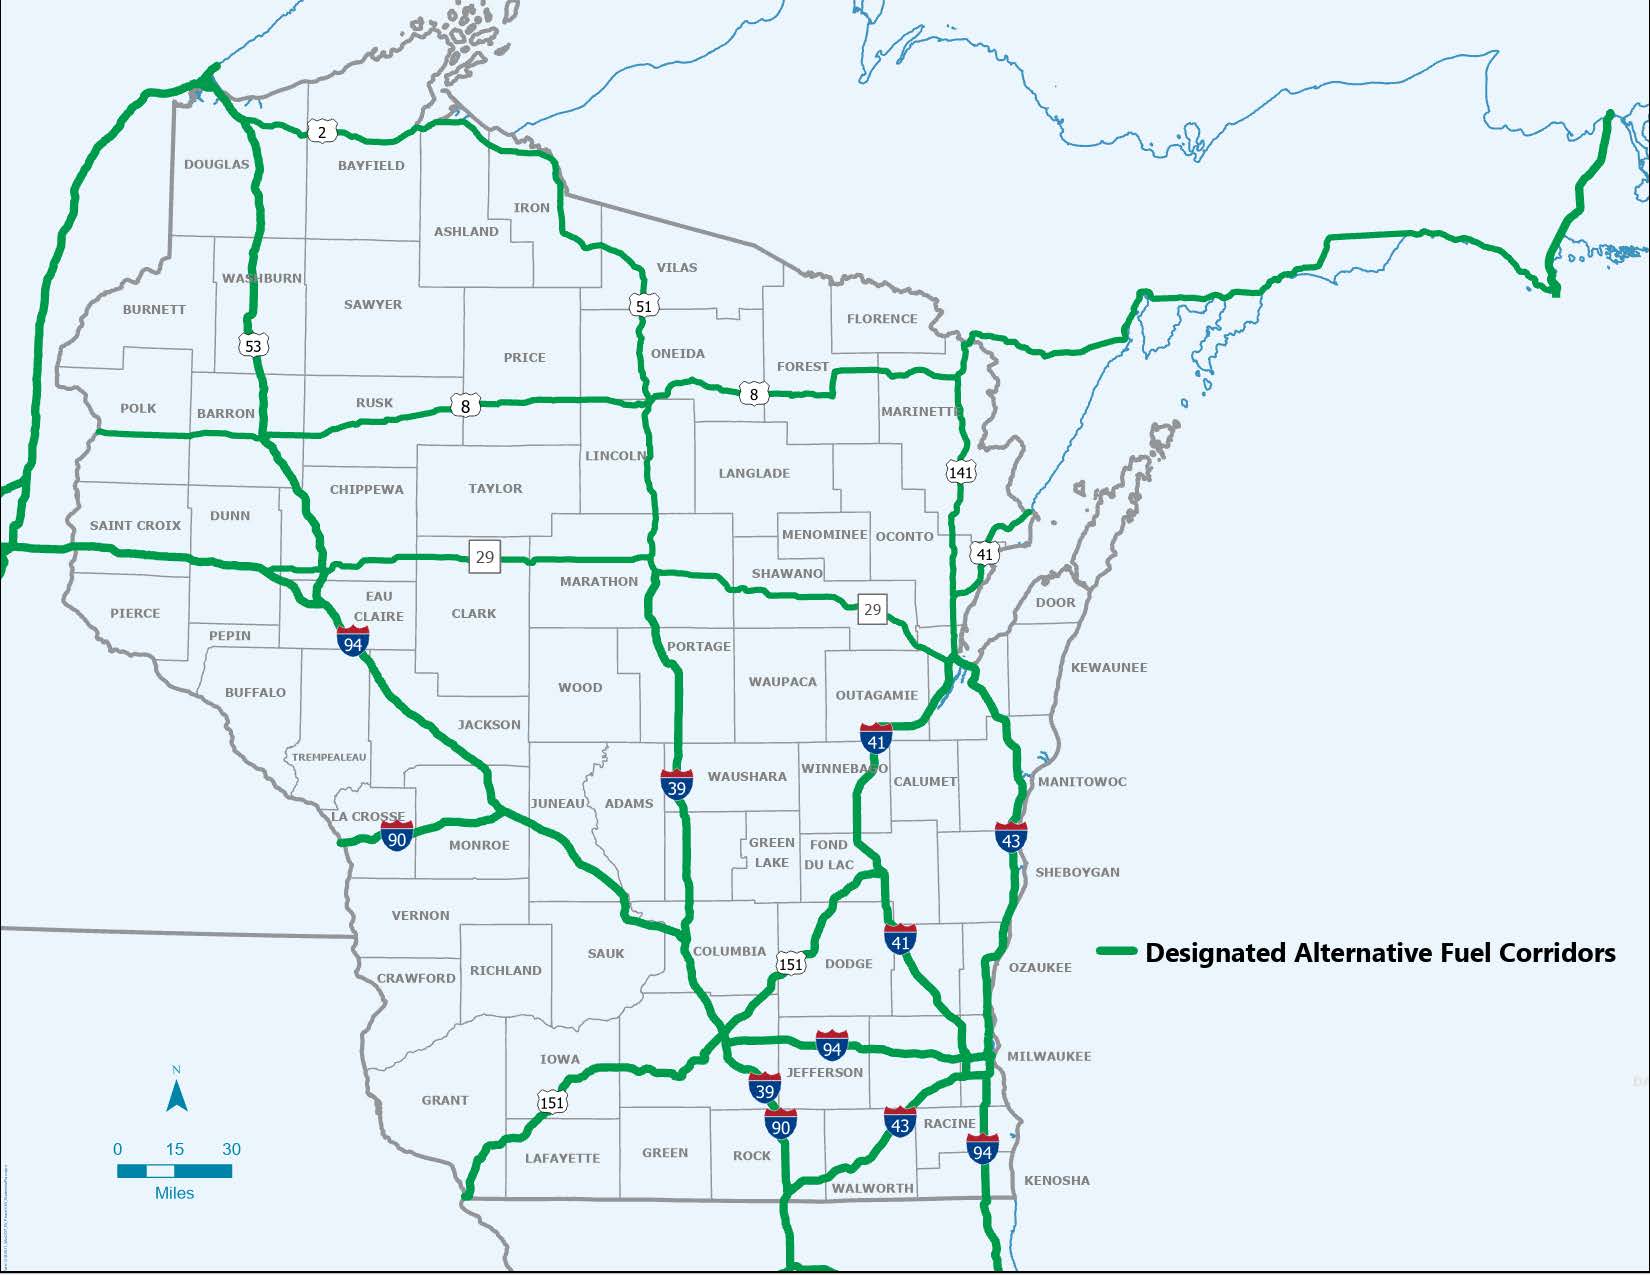 Map of Wisconsin showing Alternative Fuel Corridors